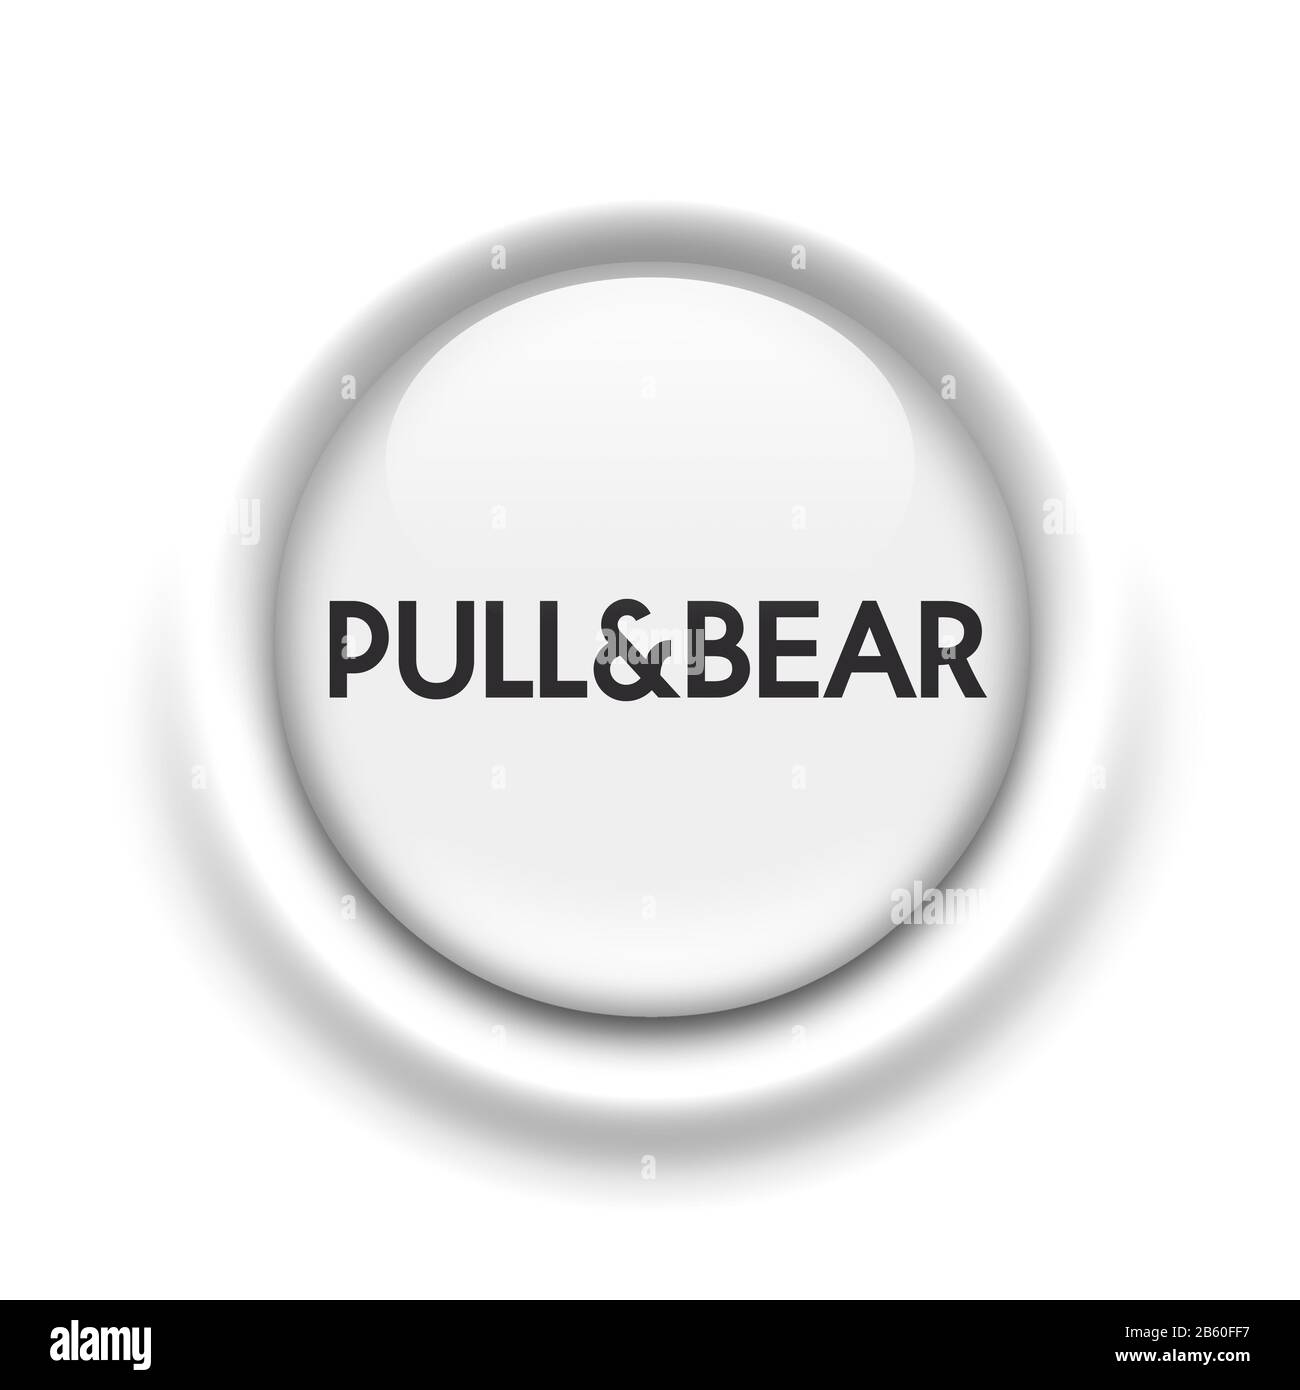 Pull & Bear logo Stock Photo - Alamy